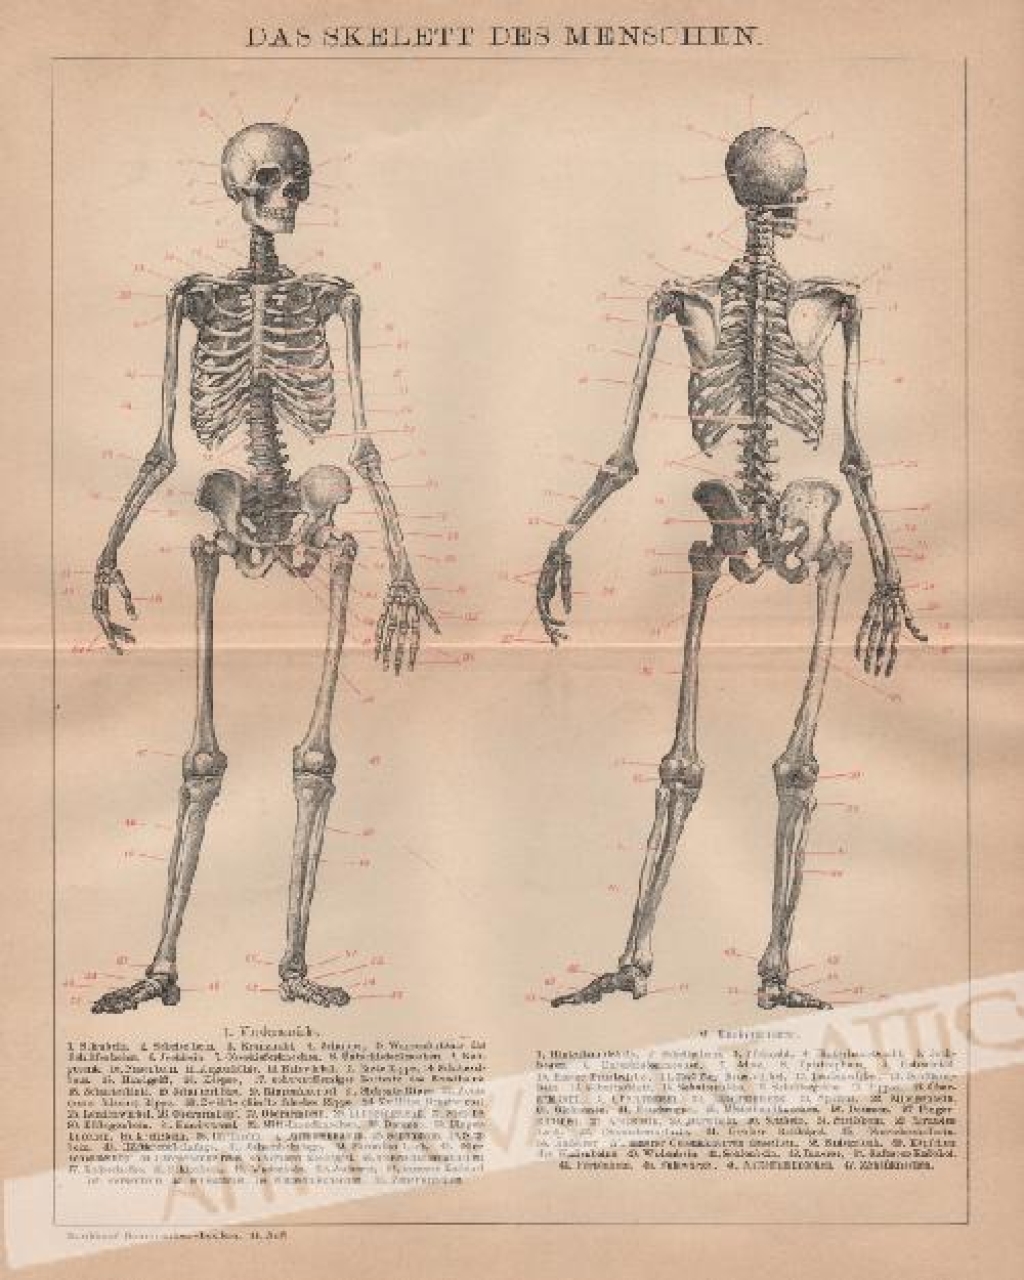 [rycina, 1898] Das Skelett des Menschen [szkielet człowieka] 